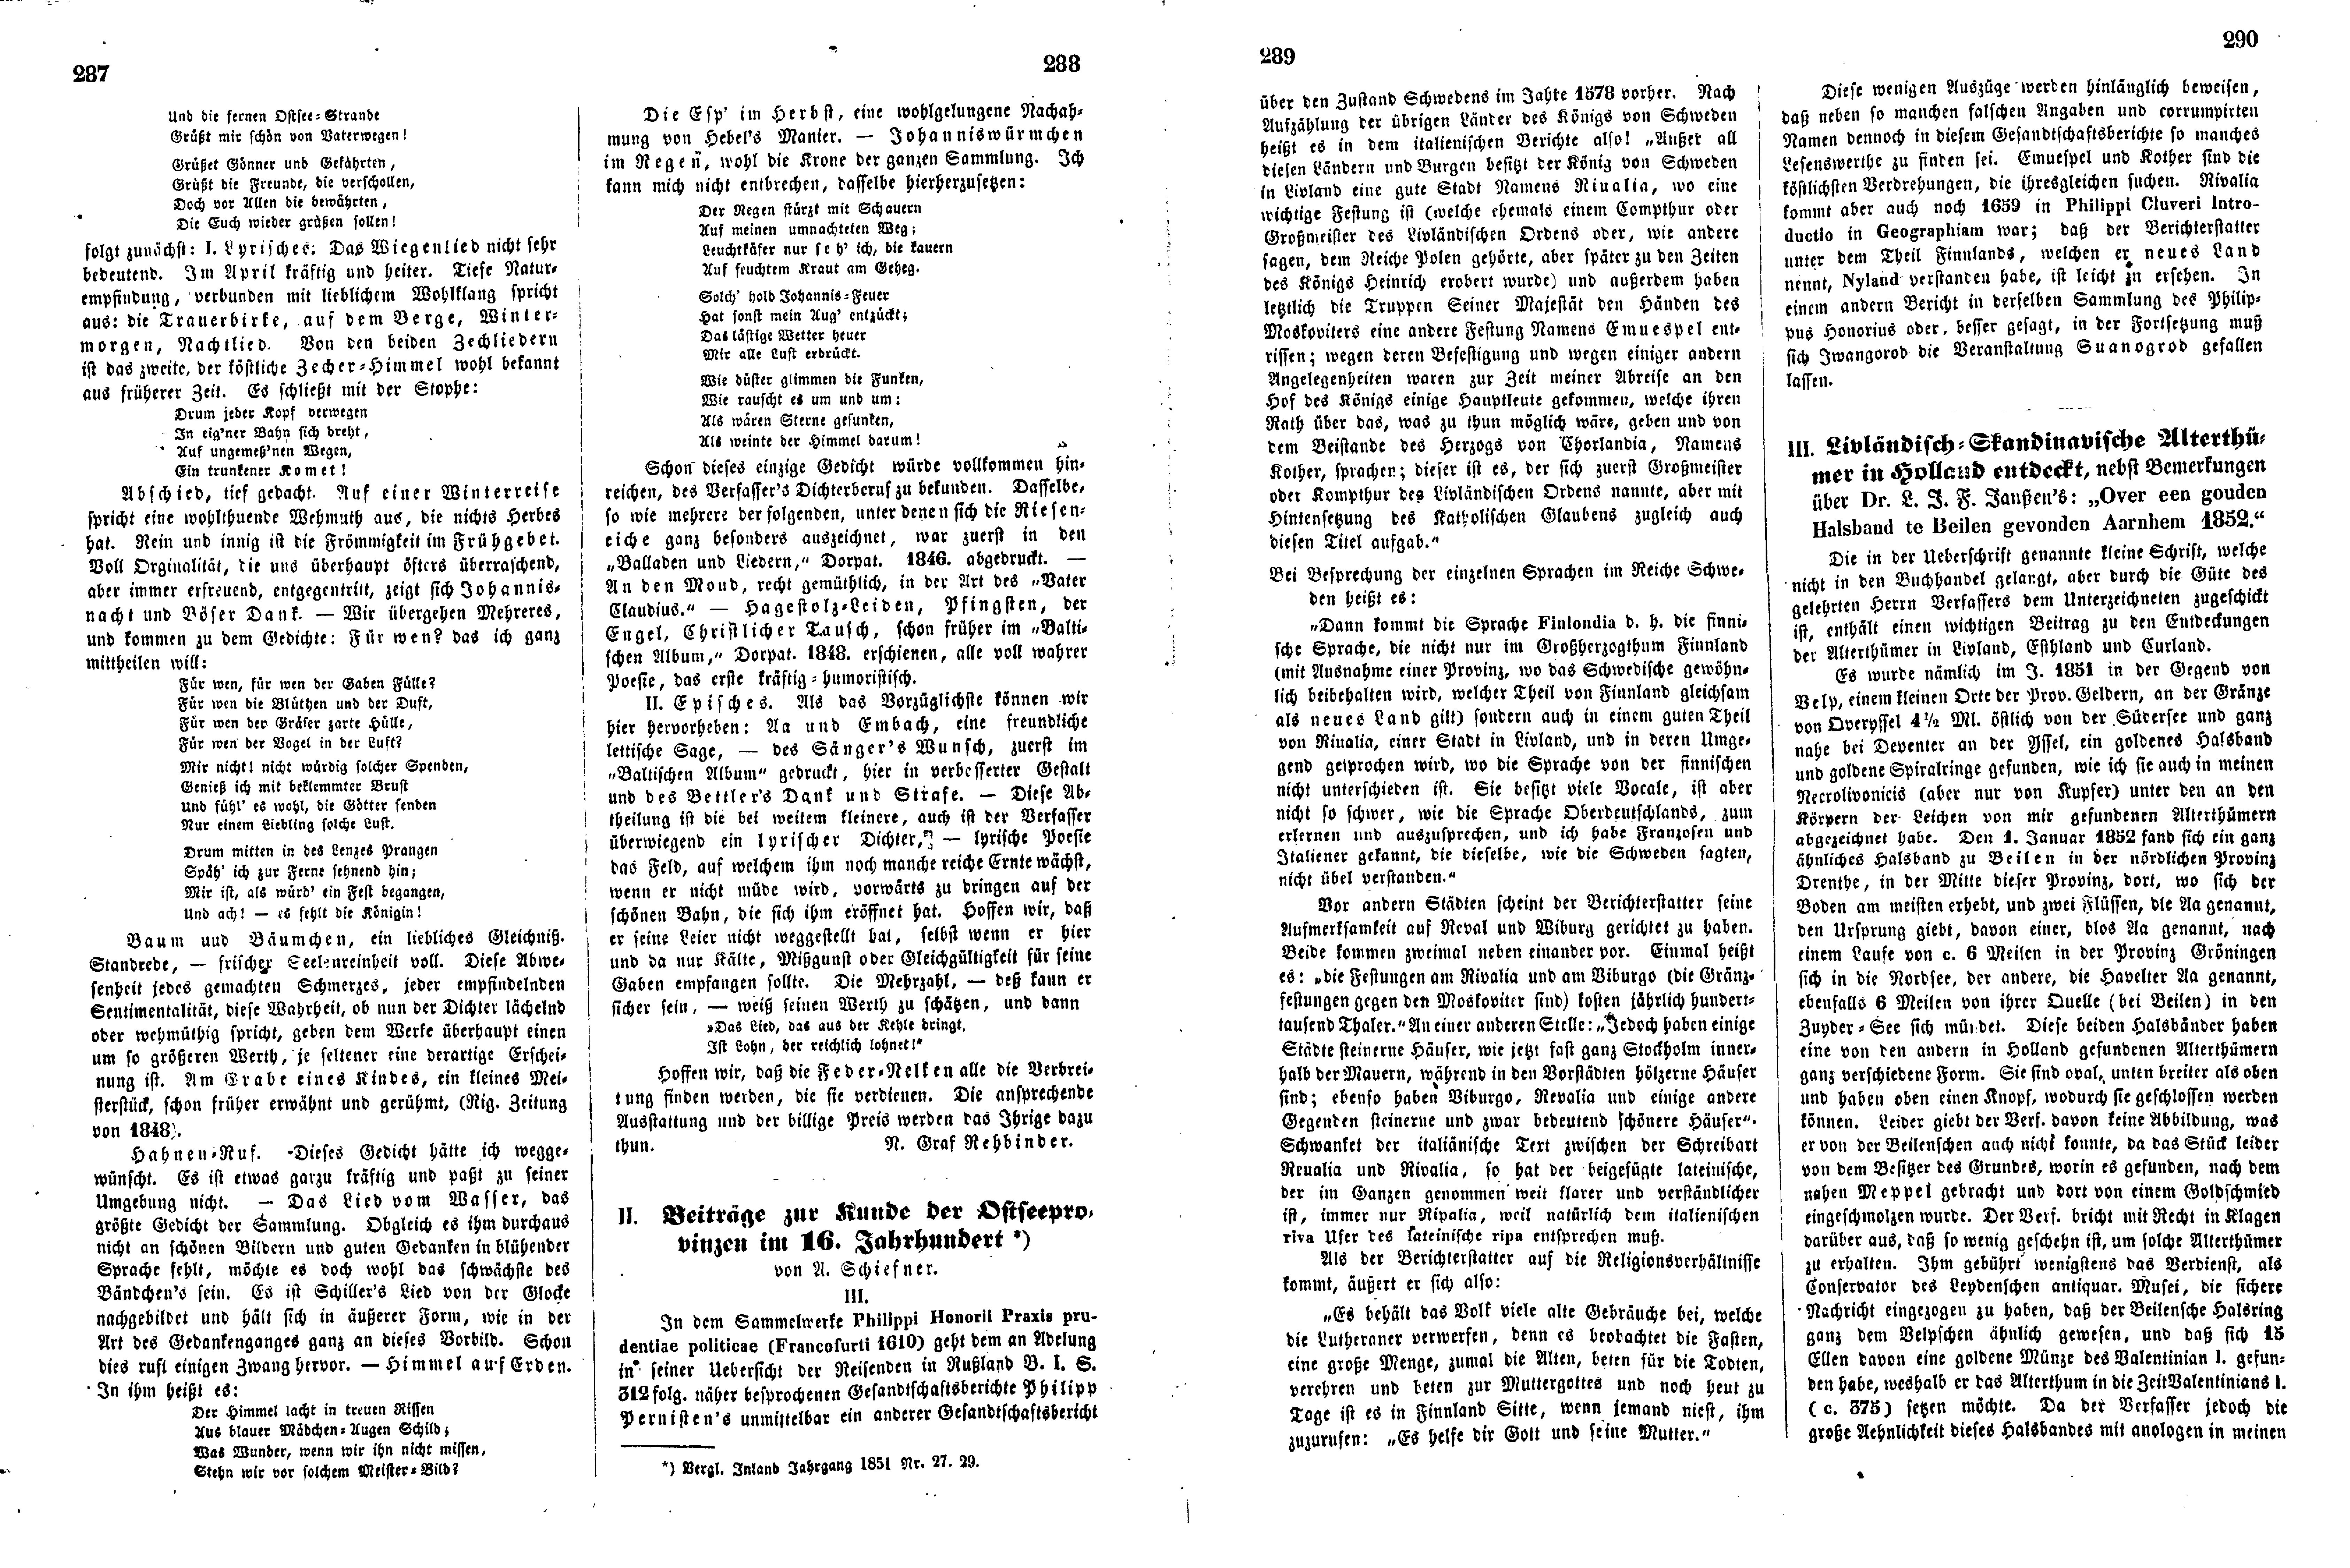 Das Inland [18] (1853) | 82. (287-290) Main body of text